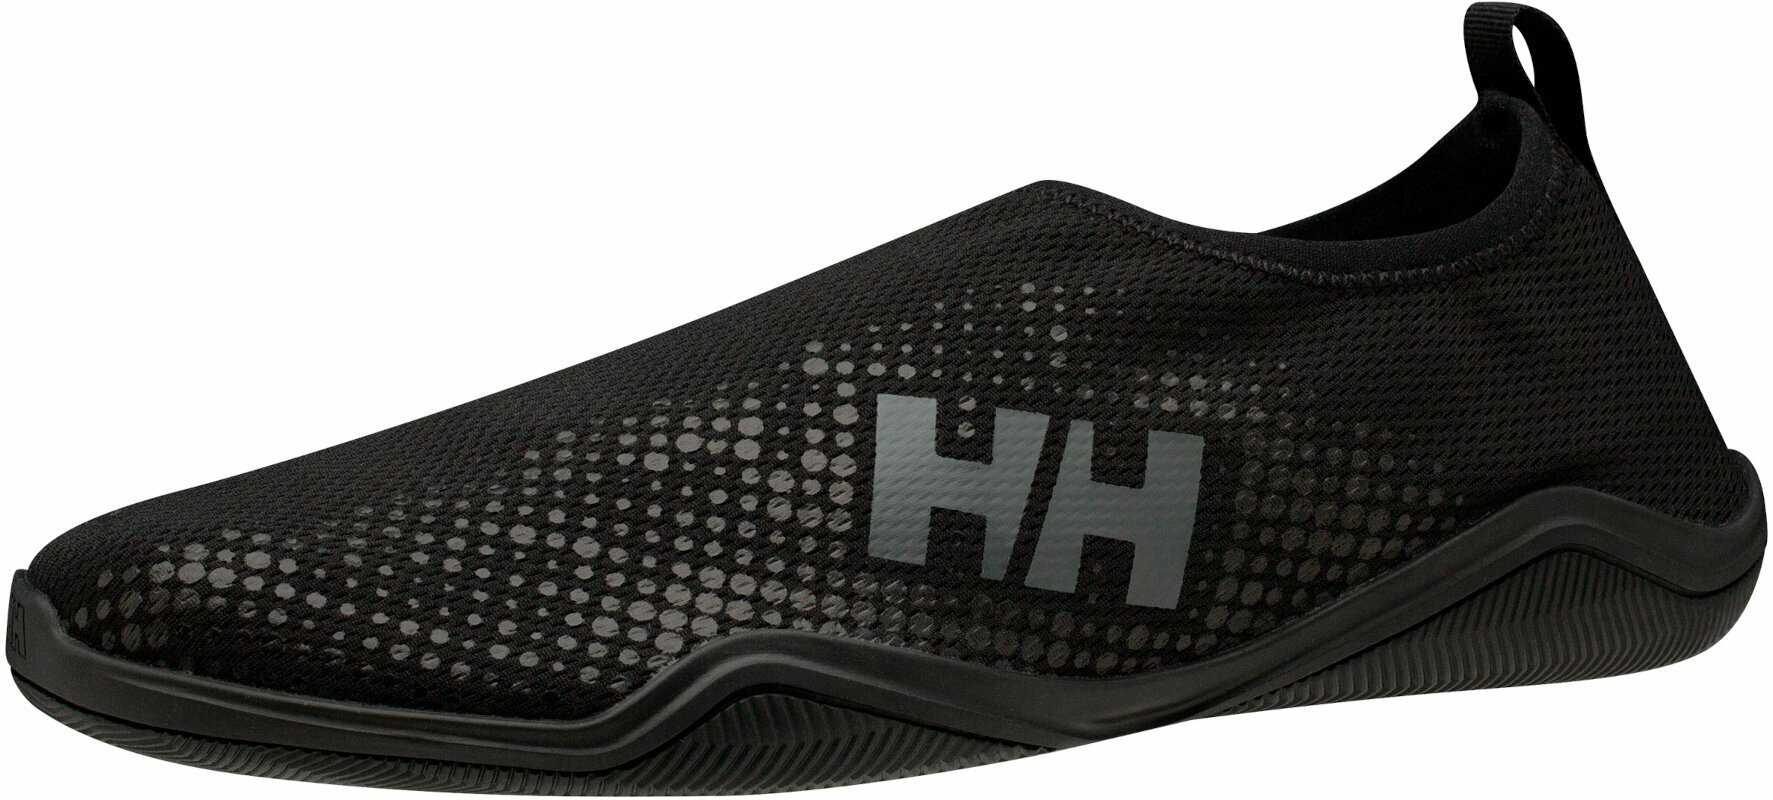 Jachtařská obuv Helly Hansen Men's Crest Watermoc Black/Charcoal 43